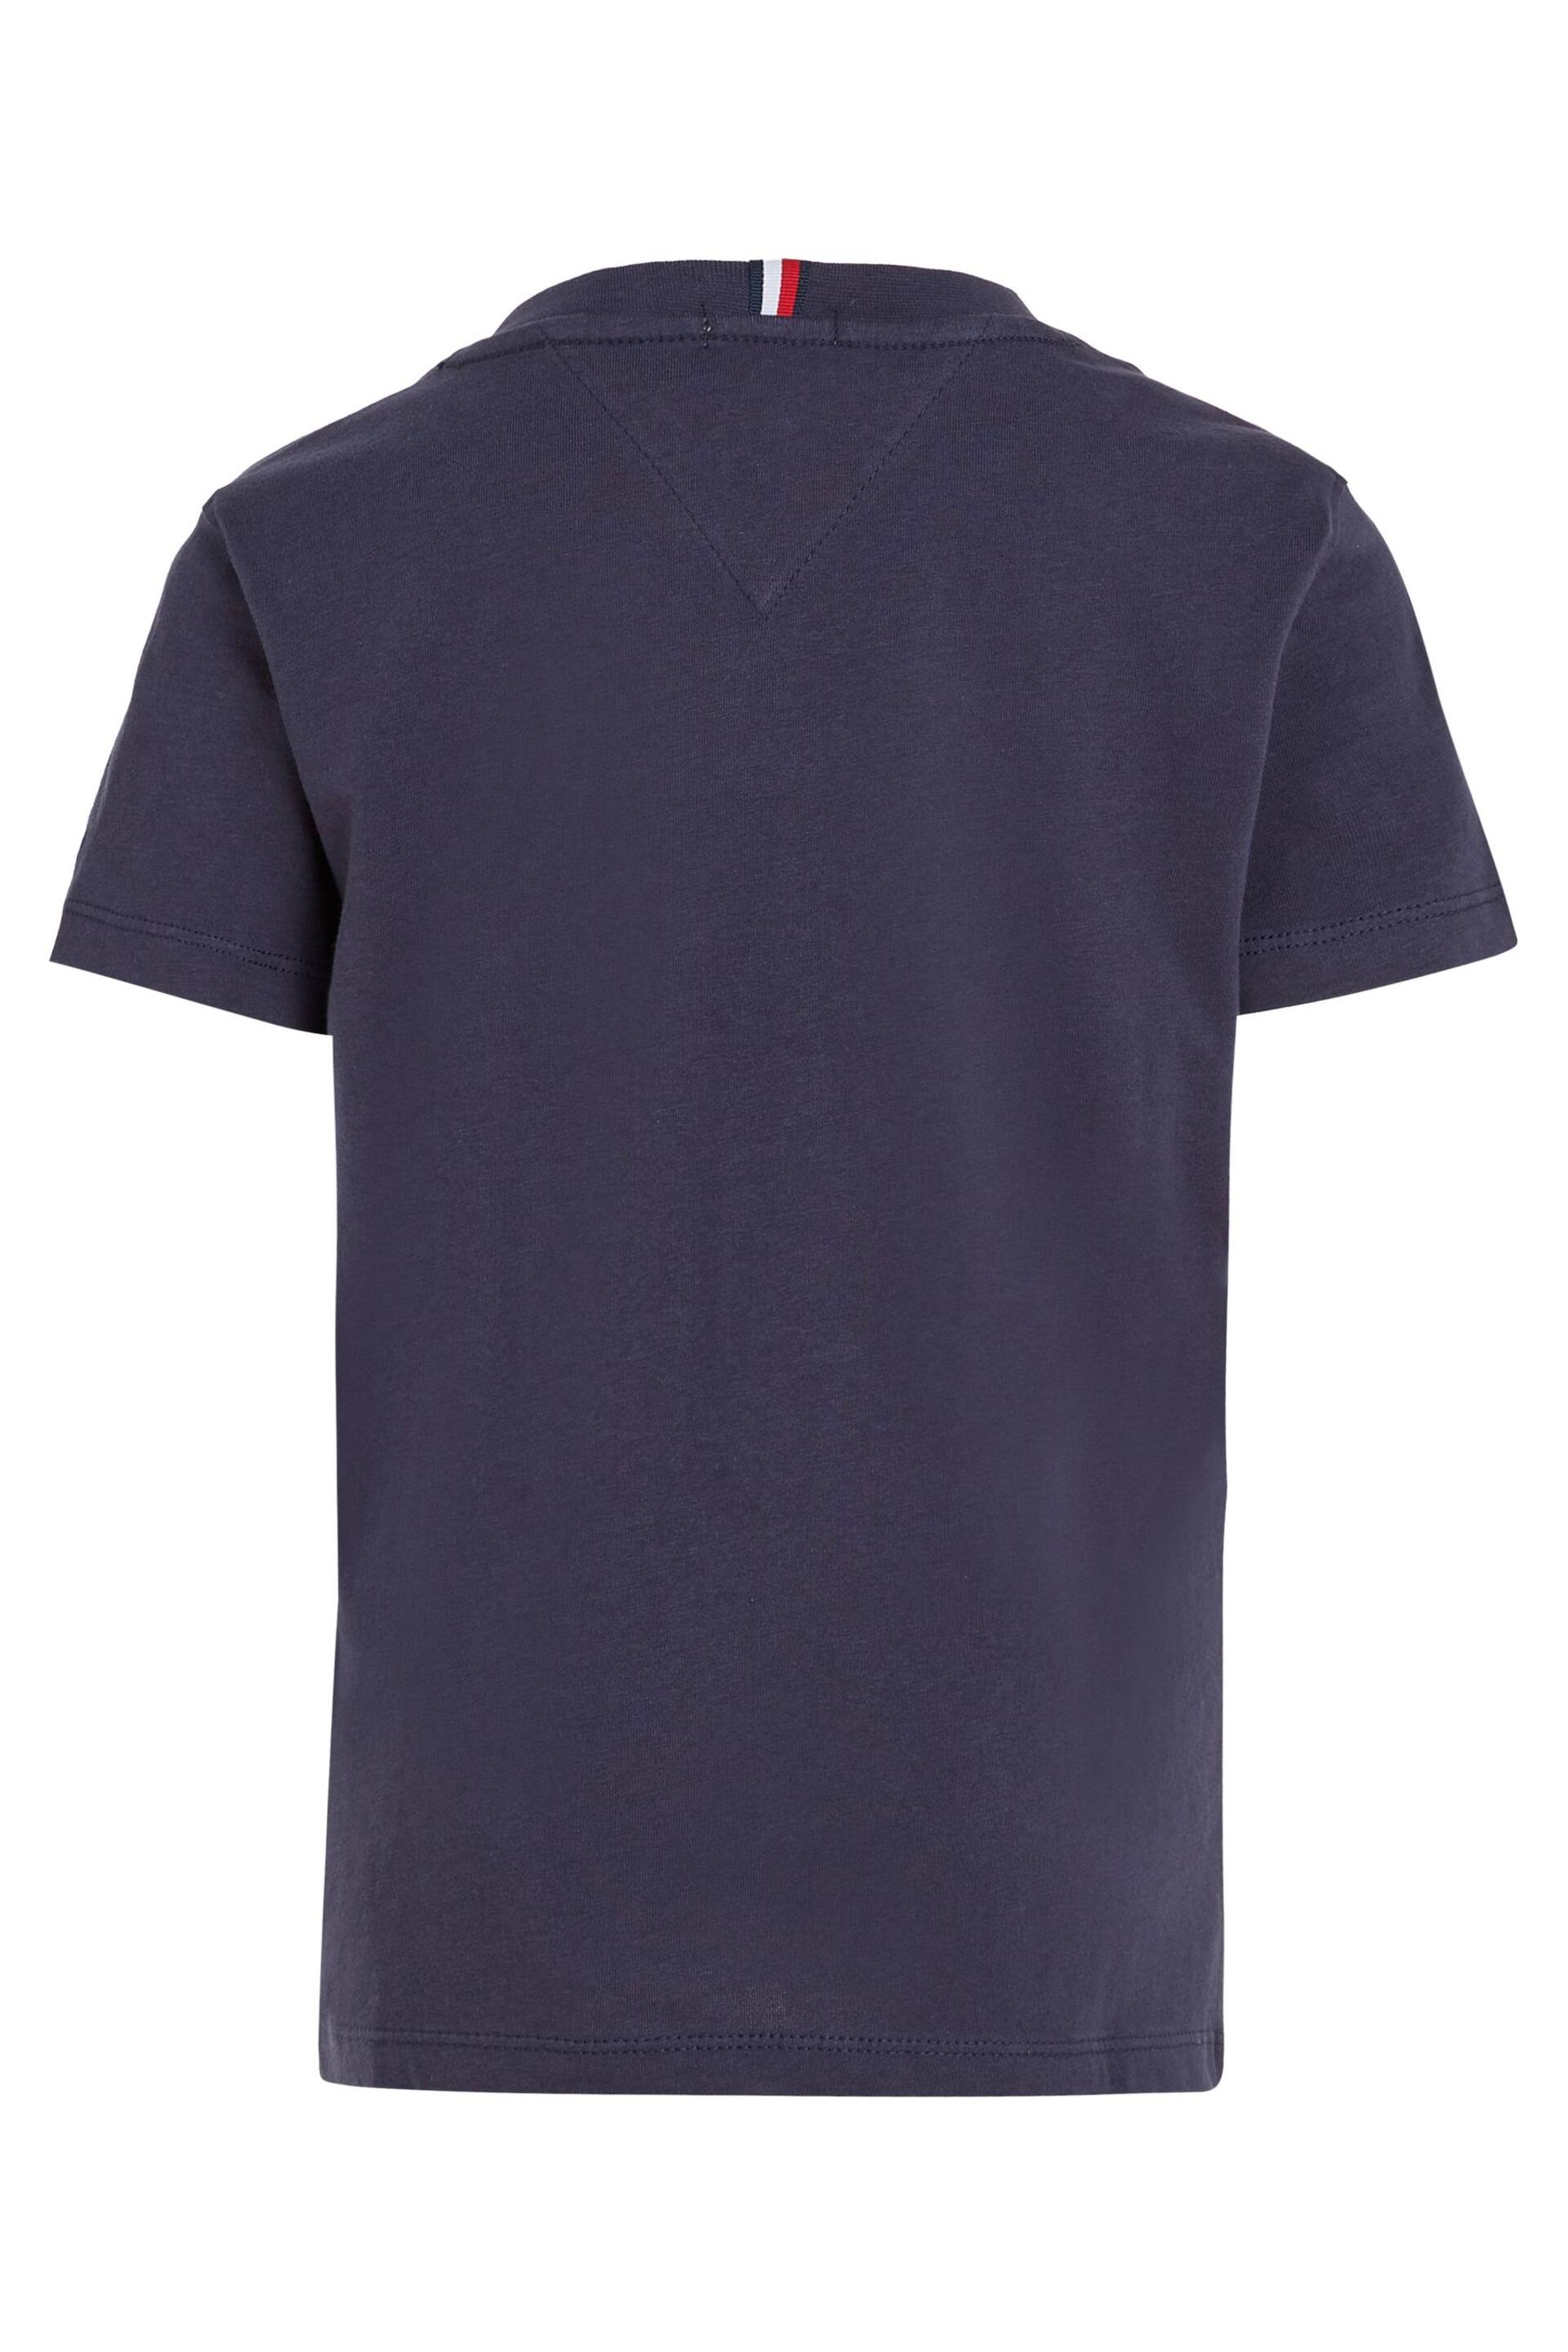 Tommy Hilfiger Blue Essential T-Shirt - Image 2 of 5